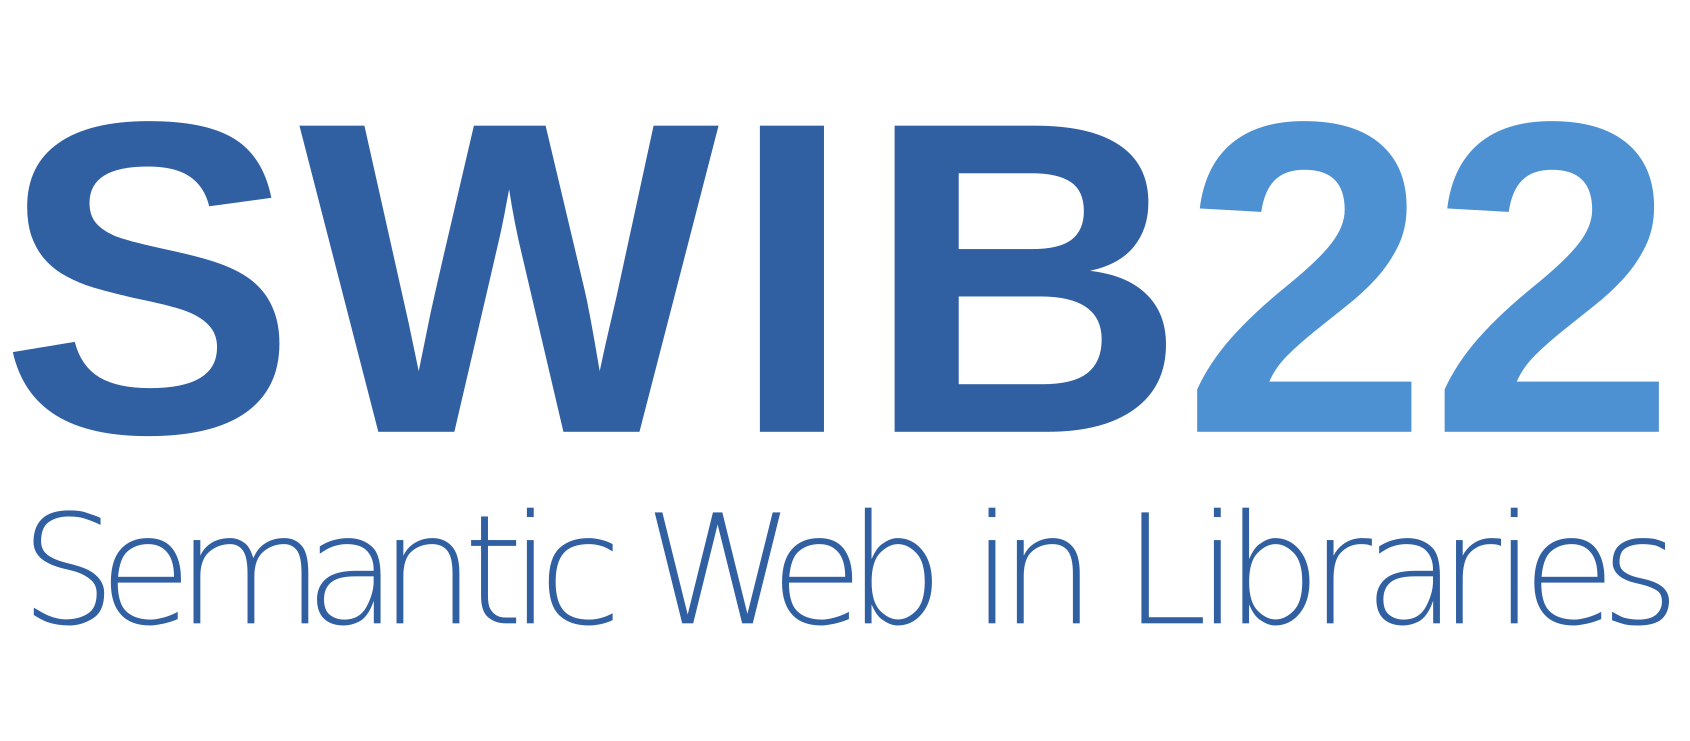 Logo: SWIB22 - Semantic Web in Libraries - 28 November - 2 December 2022, on the web